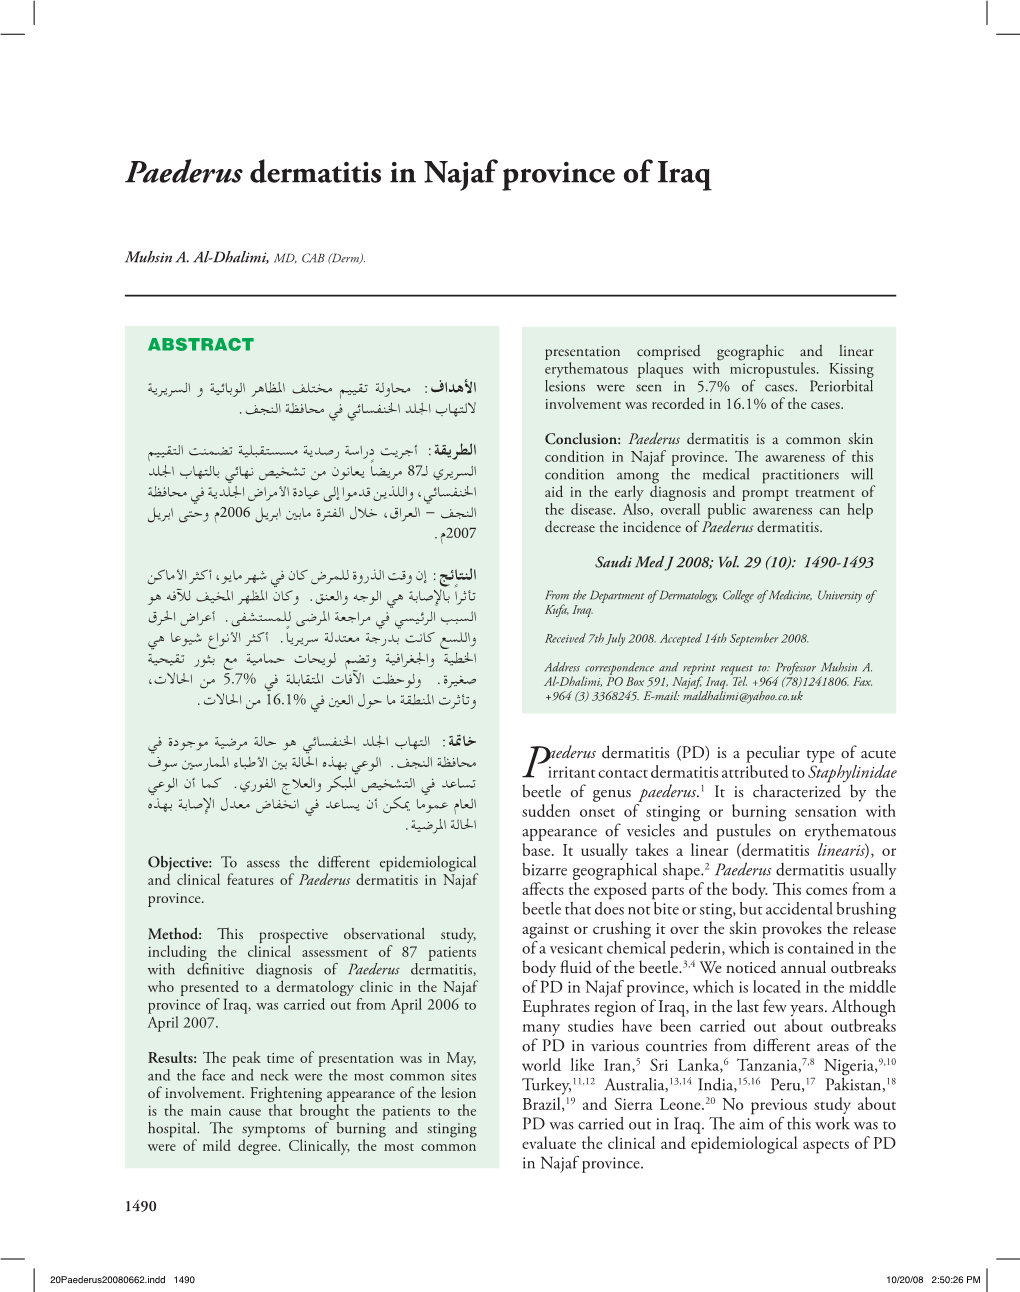 Paederus Dermatitis in Najaf Province of Iraq